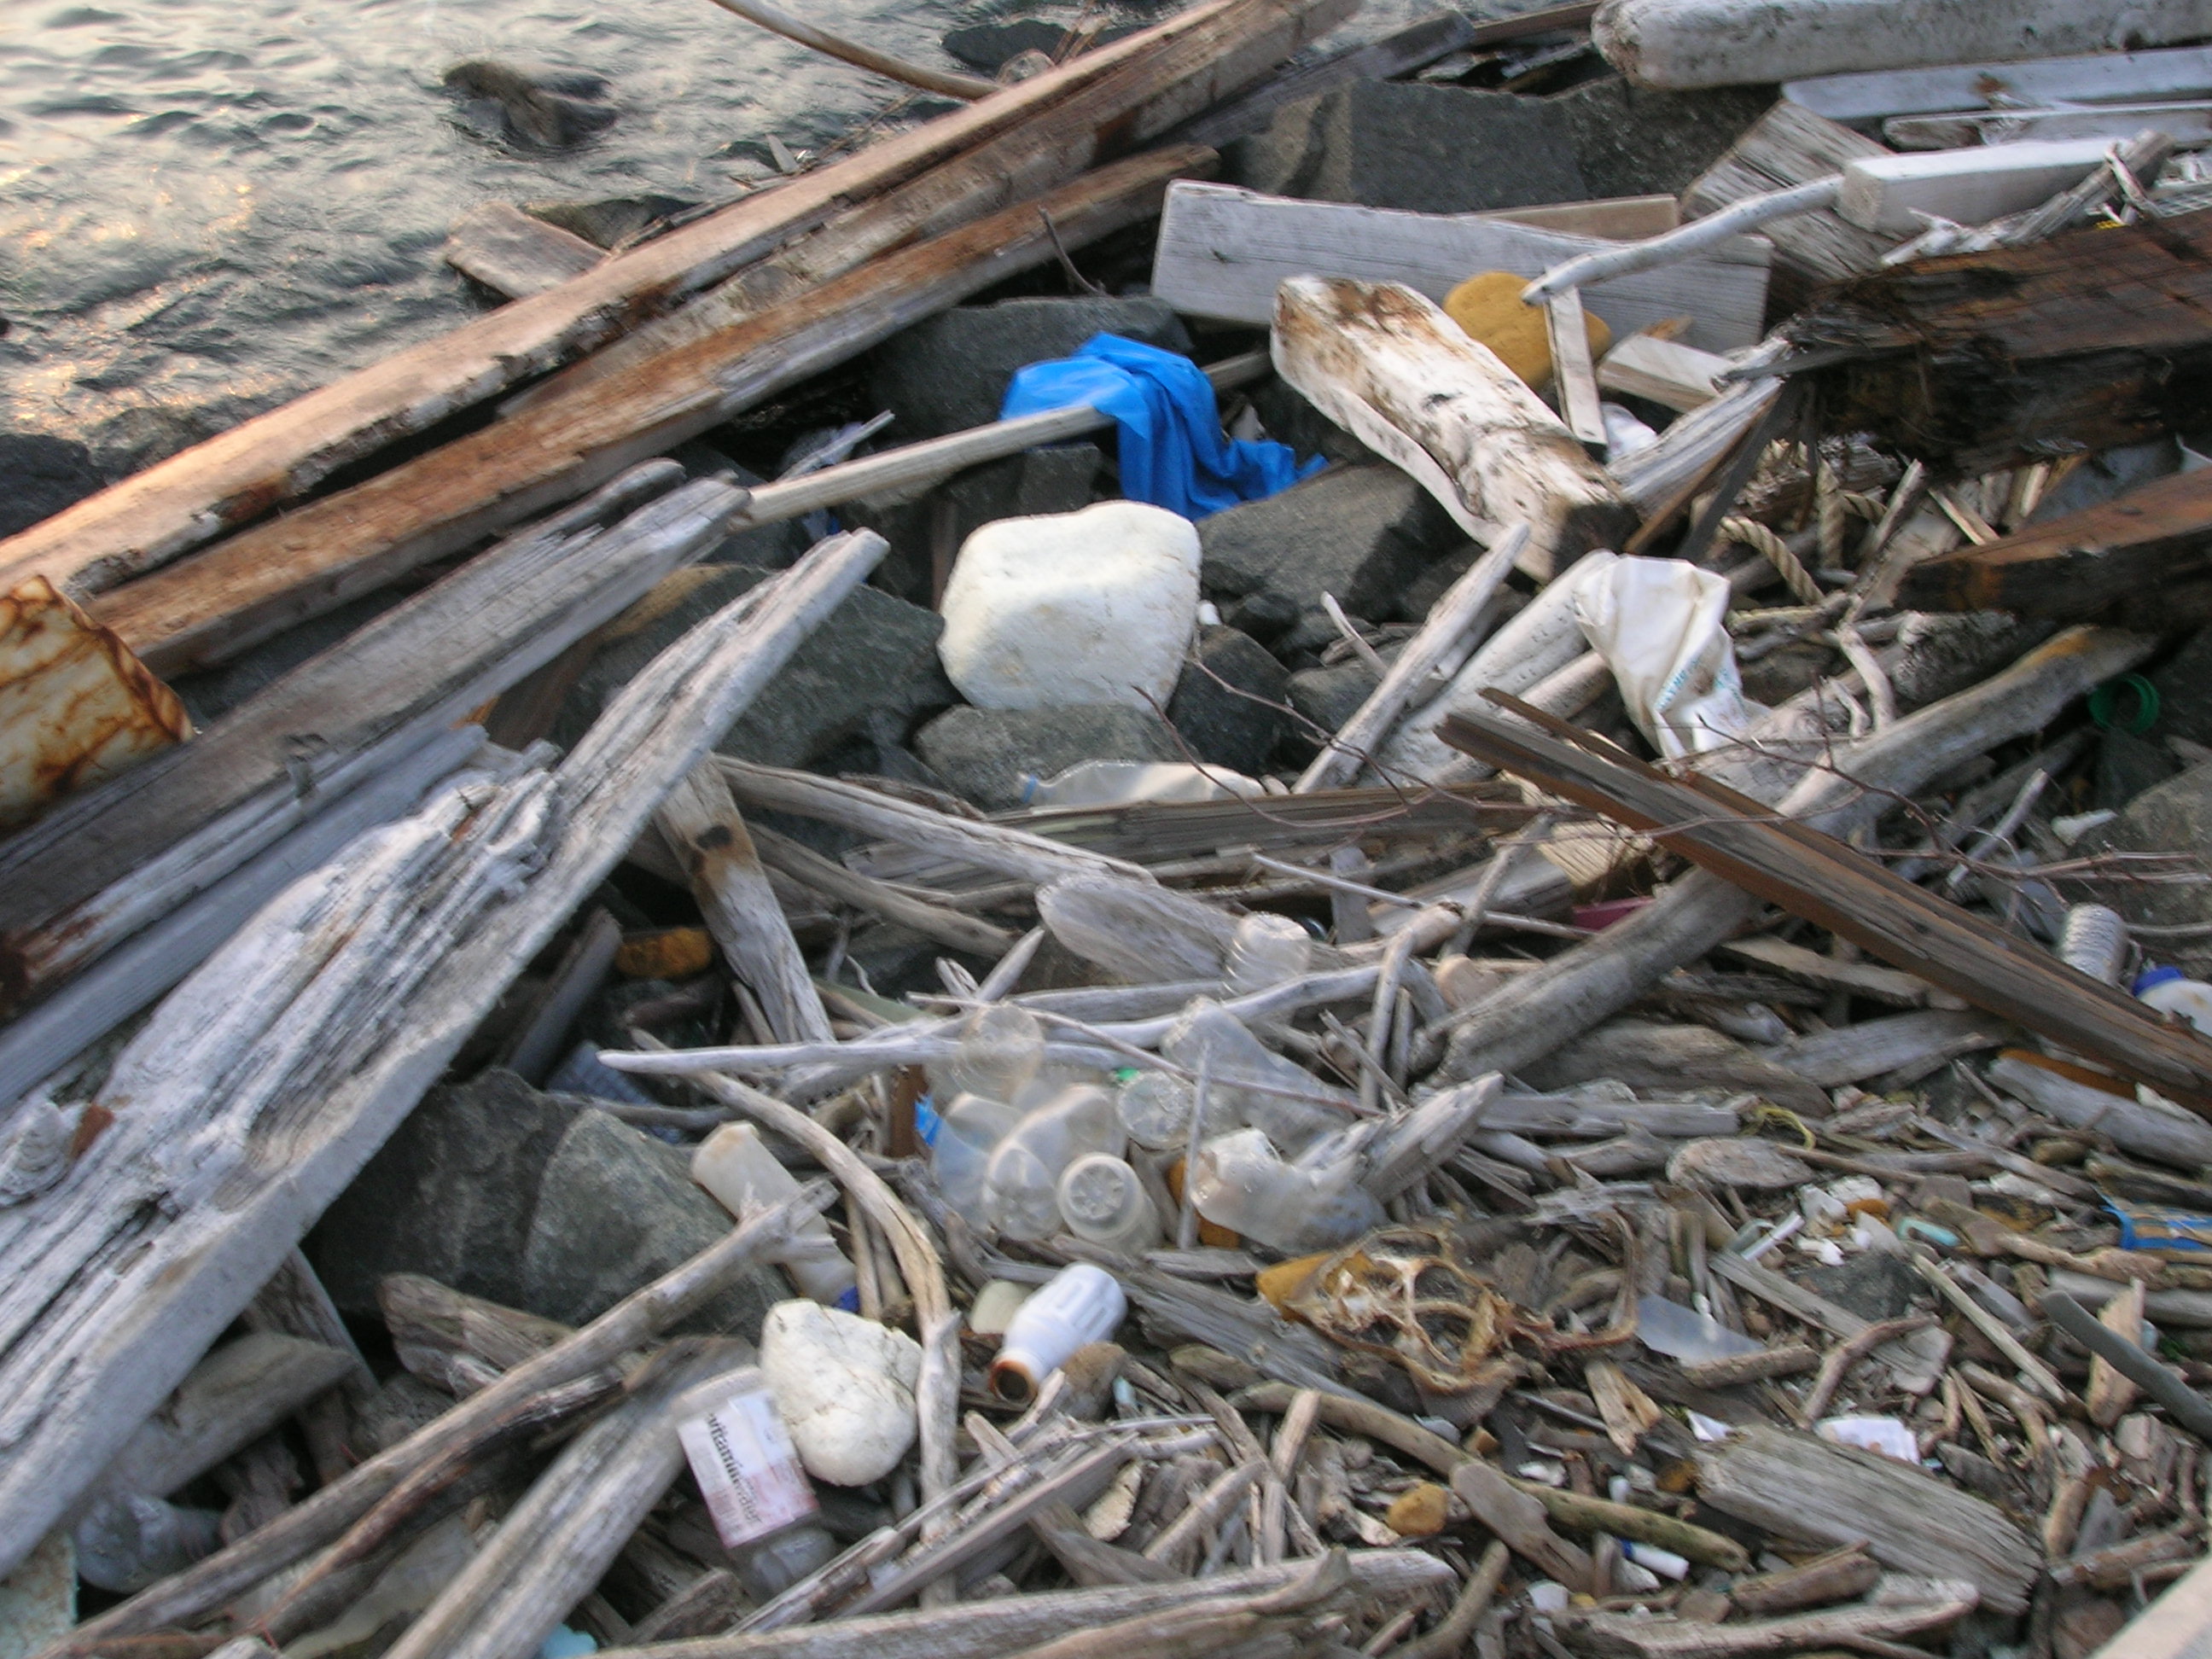 May 2009 photos of NY harbor garbage in Brooklyn